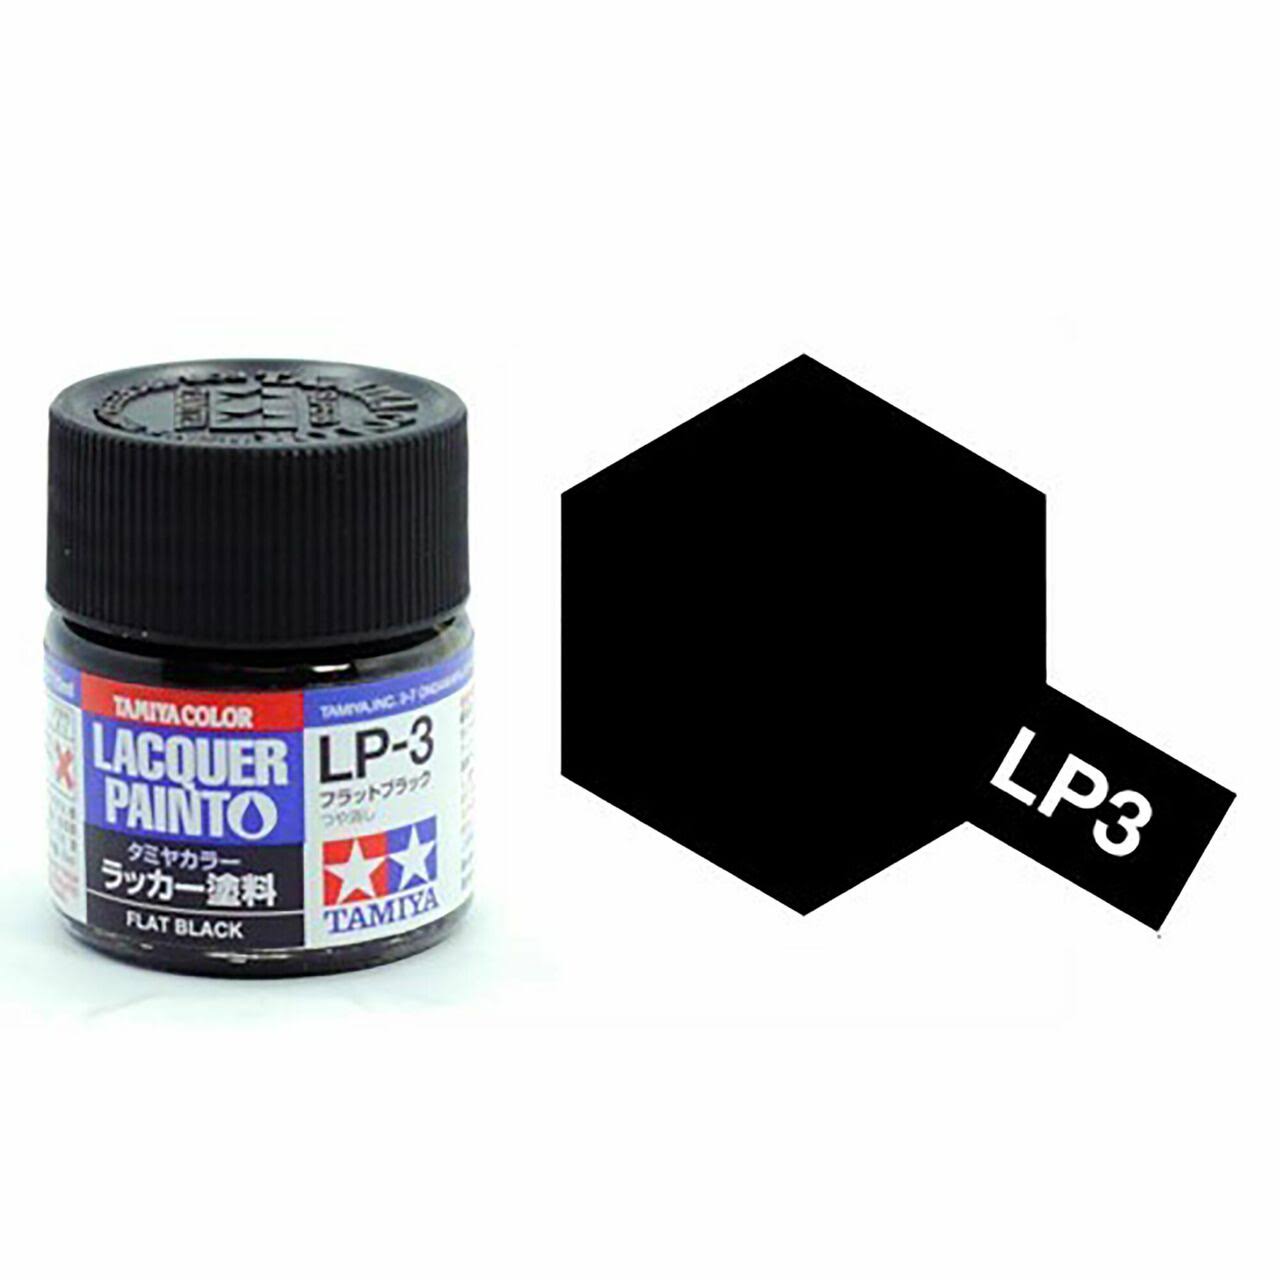 Tamiya - Lacquer Paint LP-3 Flat Black 10 ml - 82103